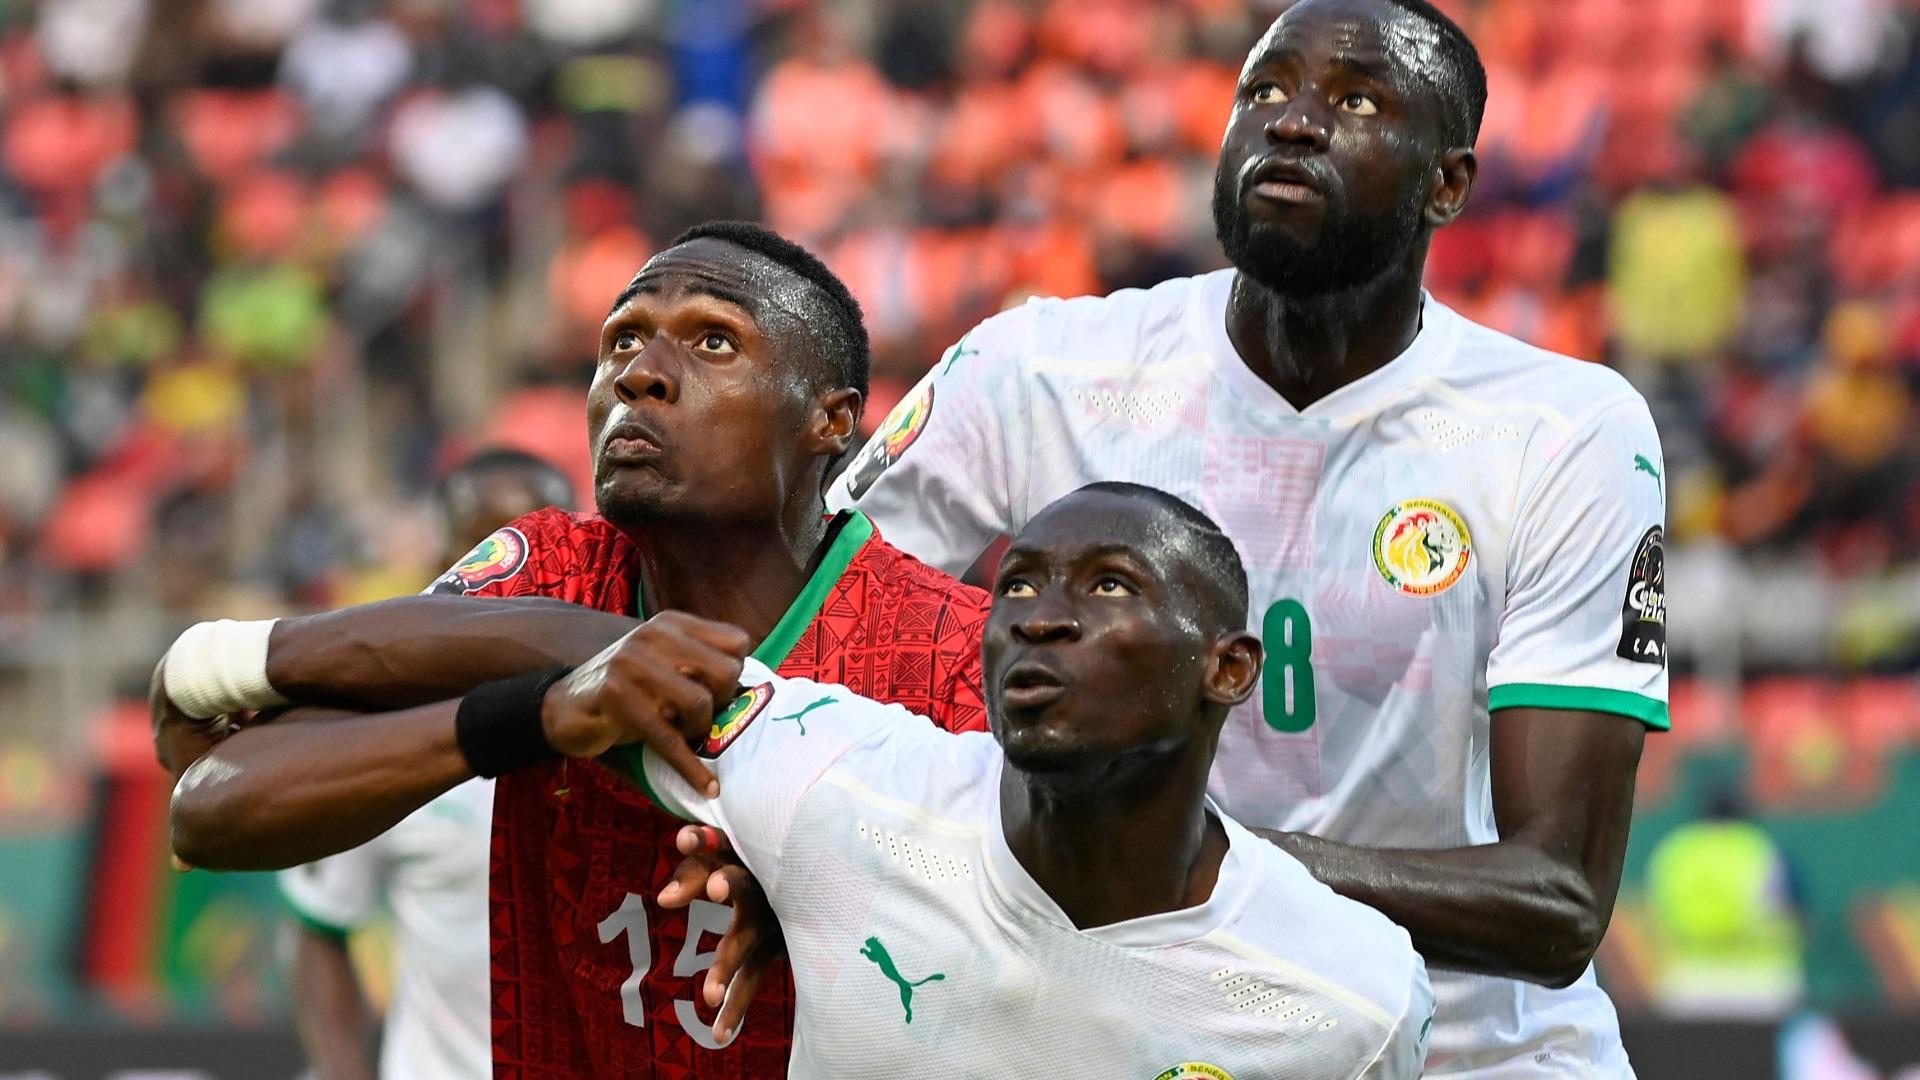 Malawi 0-0 Senegal: Teranga Lions win group after late penalty reprieve